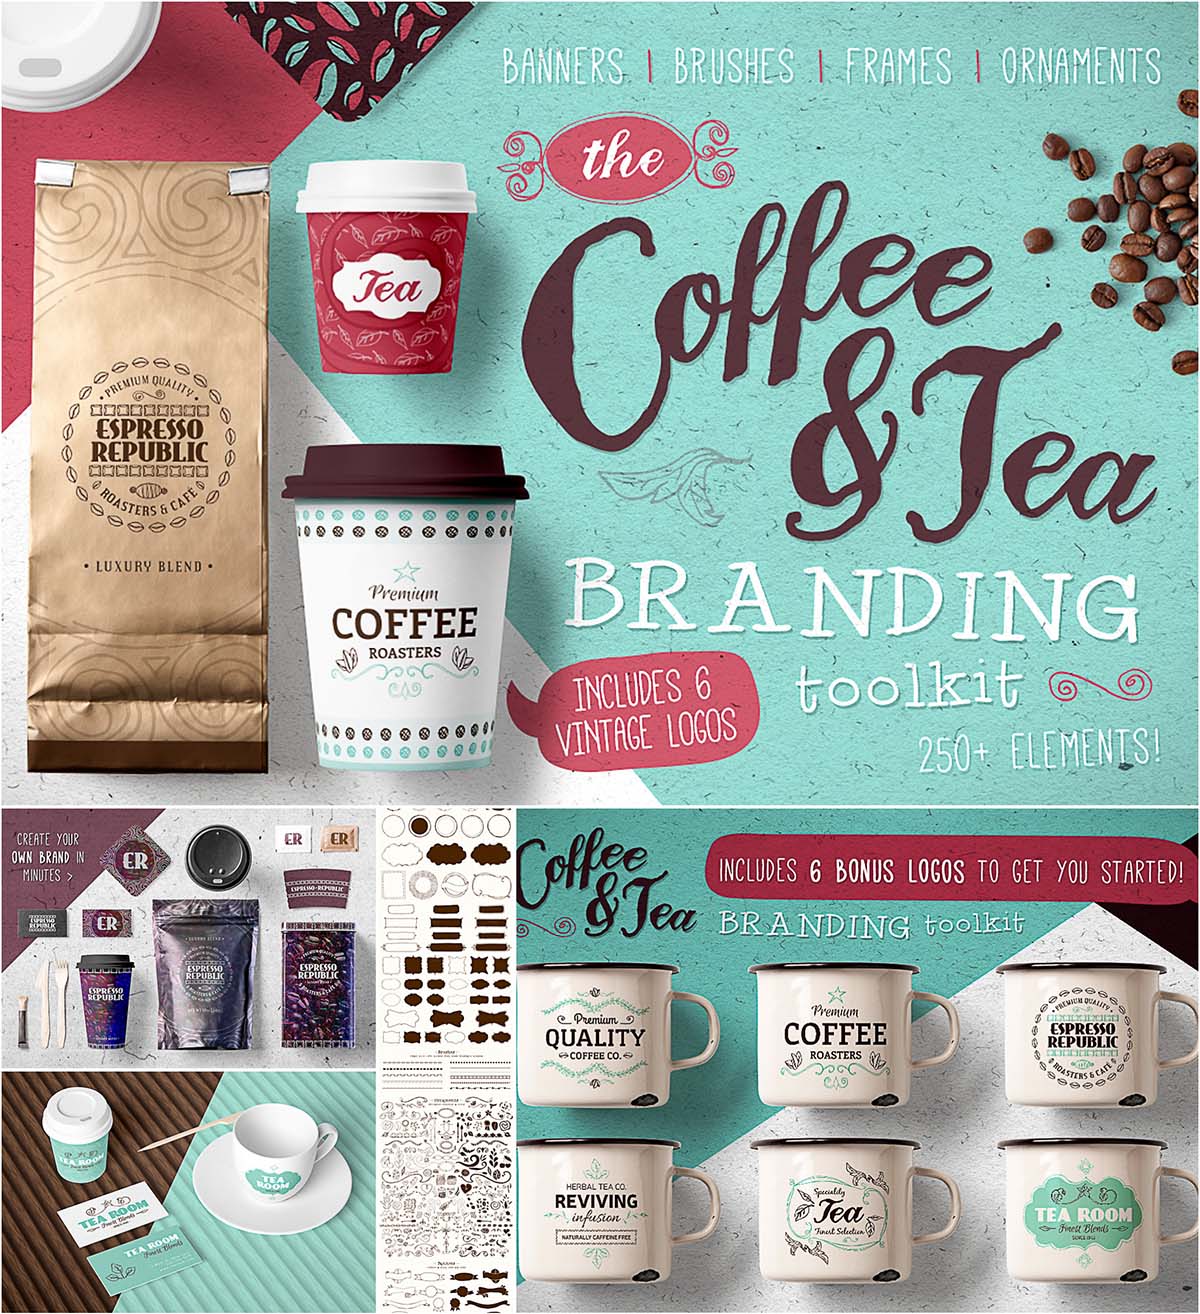 Tea and coffee branding toolkit